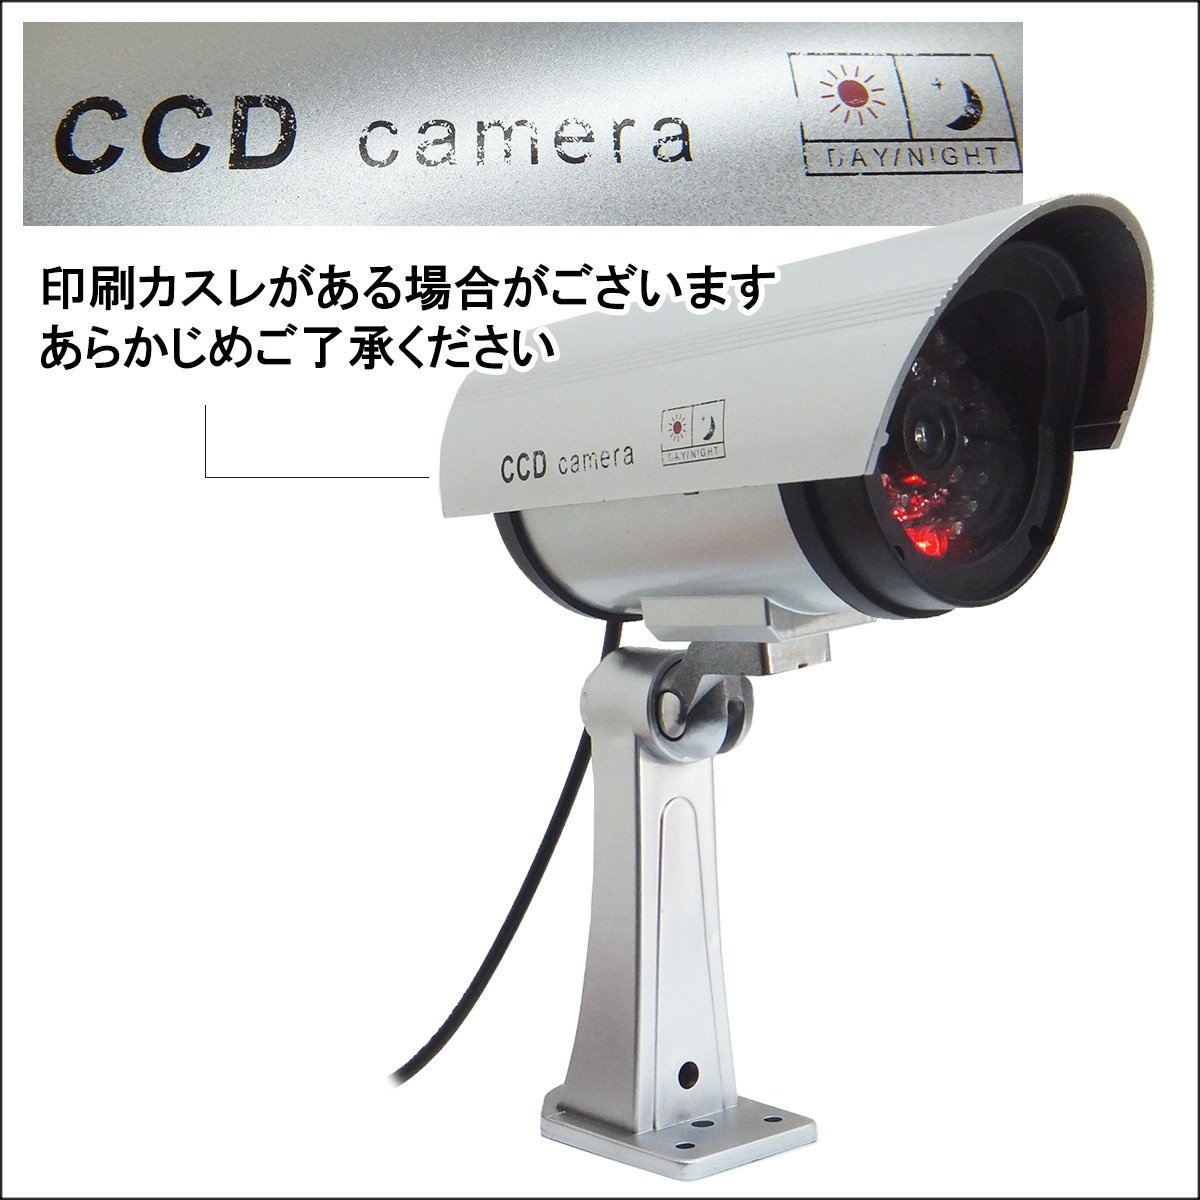 IRカメラ型 ダミーカメラⅡ 防犯カメラ 赤色LED点滅 配線不要 防犯対策 監視 簡単設置 防犯ステッカー2種類付/9_画像7